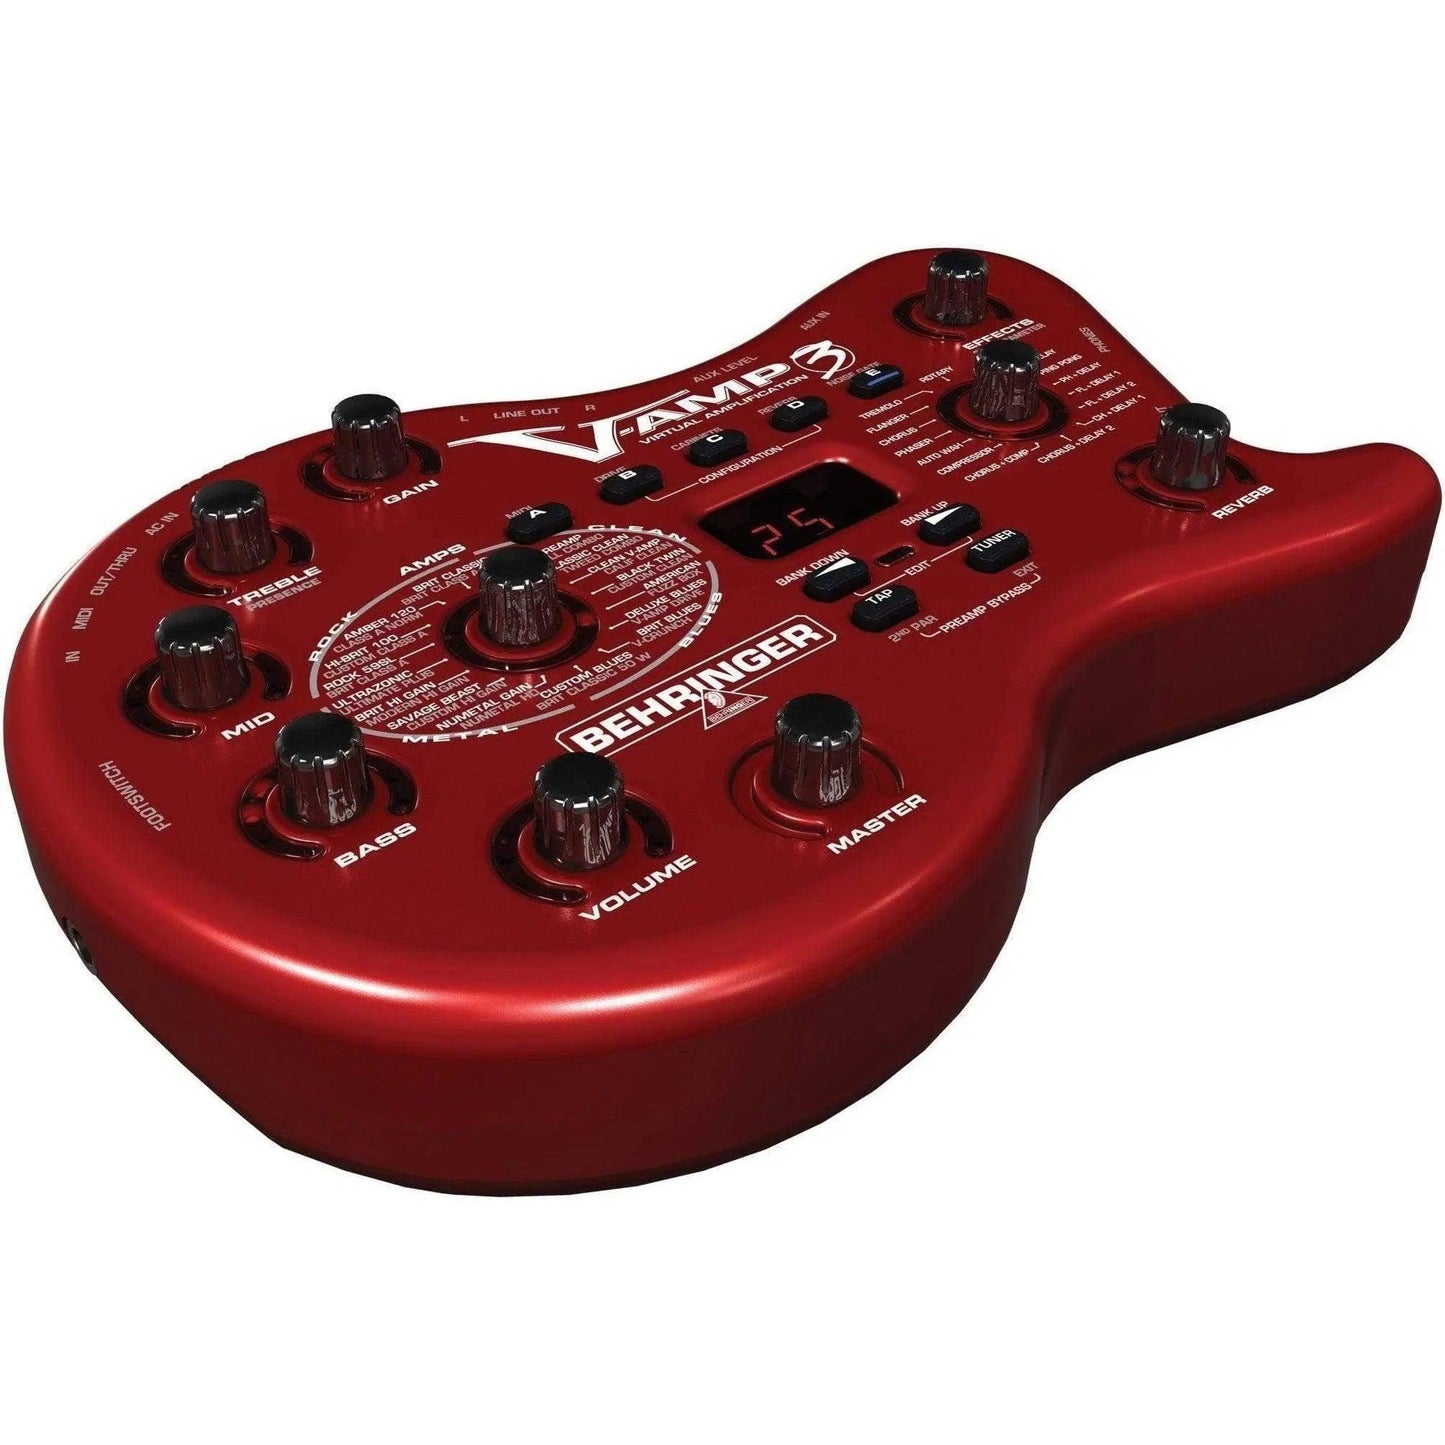 Behringer V-AMP 3 Virtual Guitar Amp with USB Interface